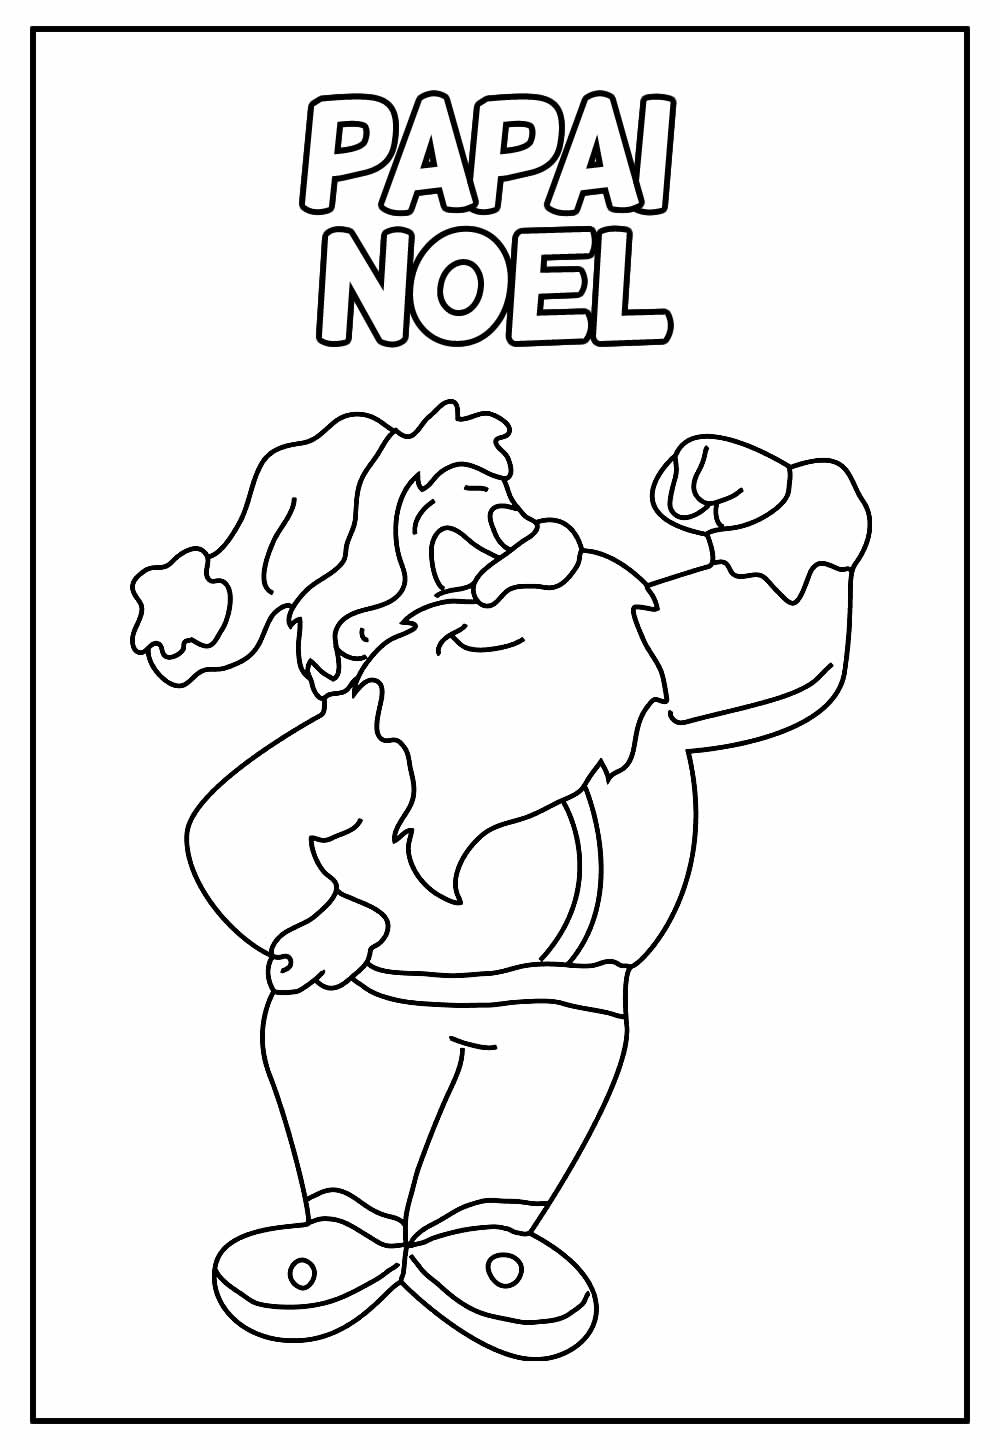 Desenho Educativo do Papai Noel